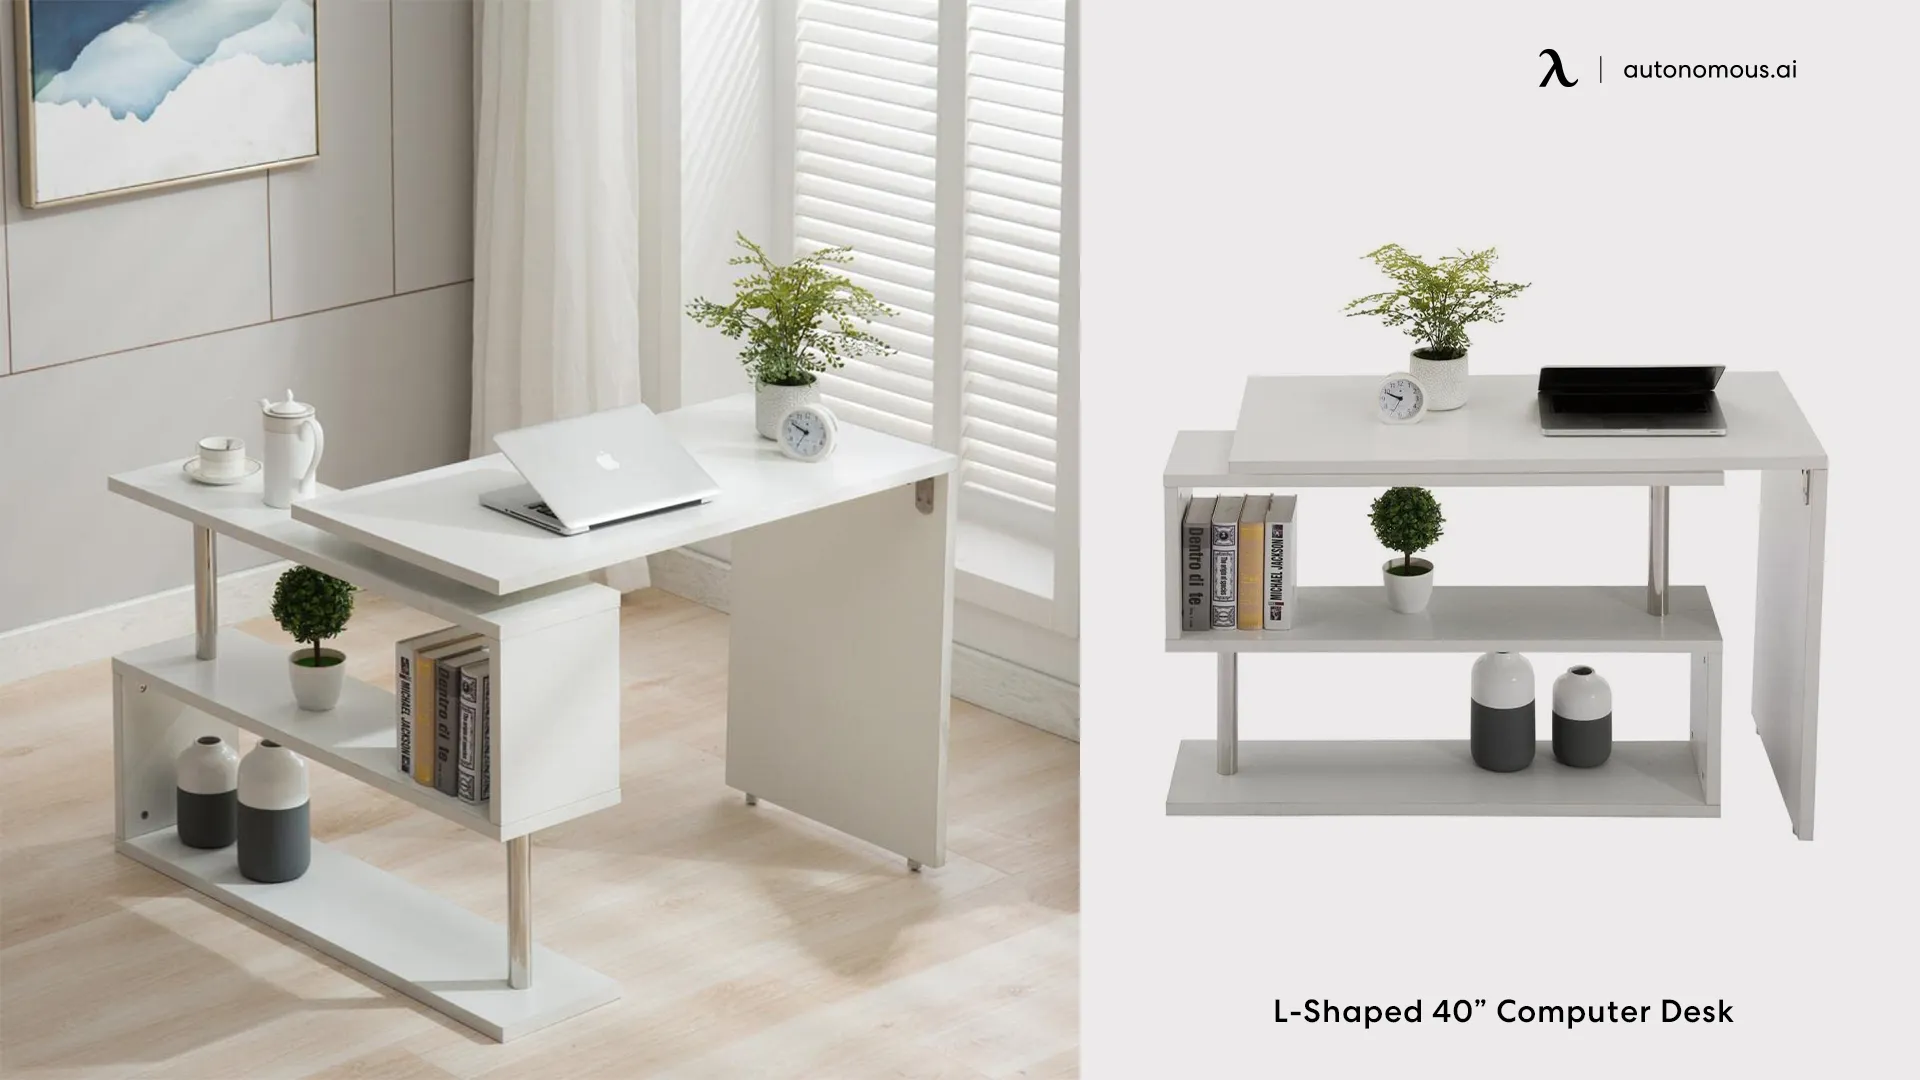 L-Shaped 40” Computer Desk